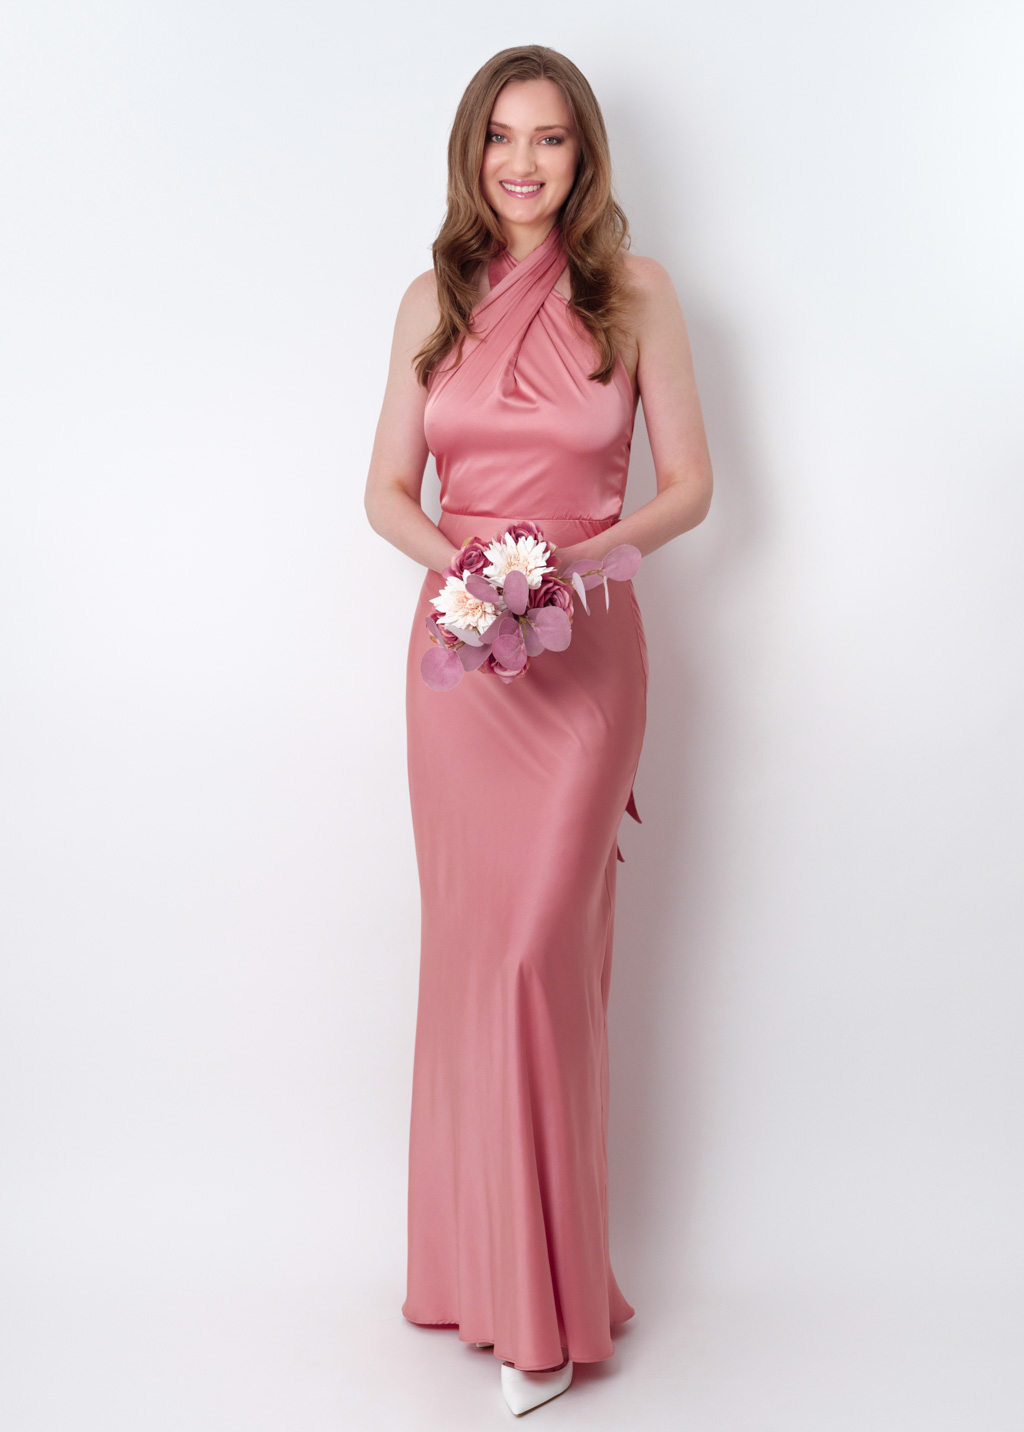 Blush pink silk long halter dress